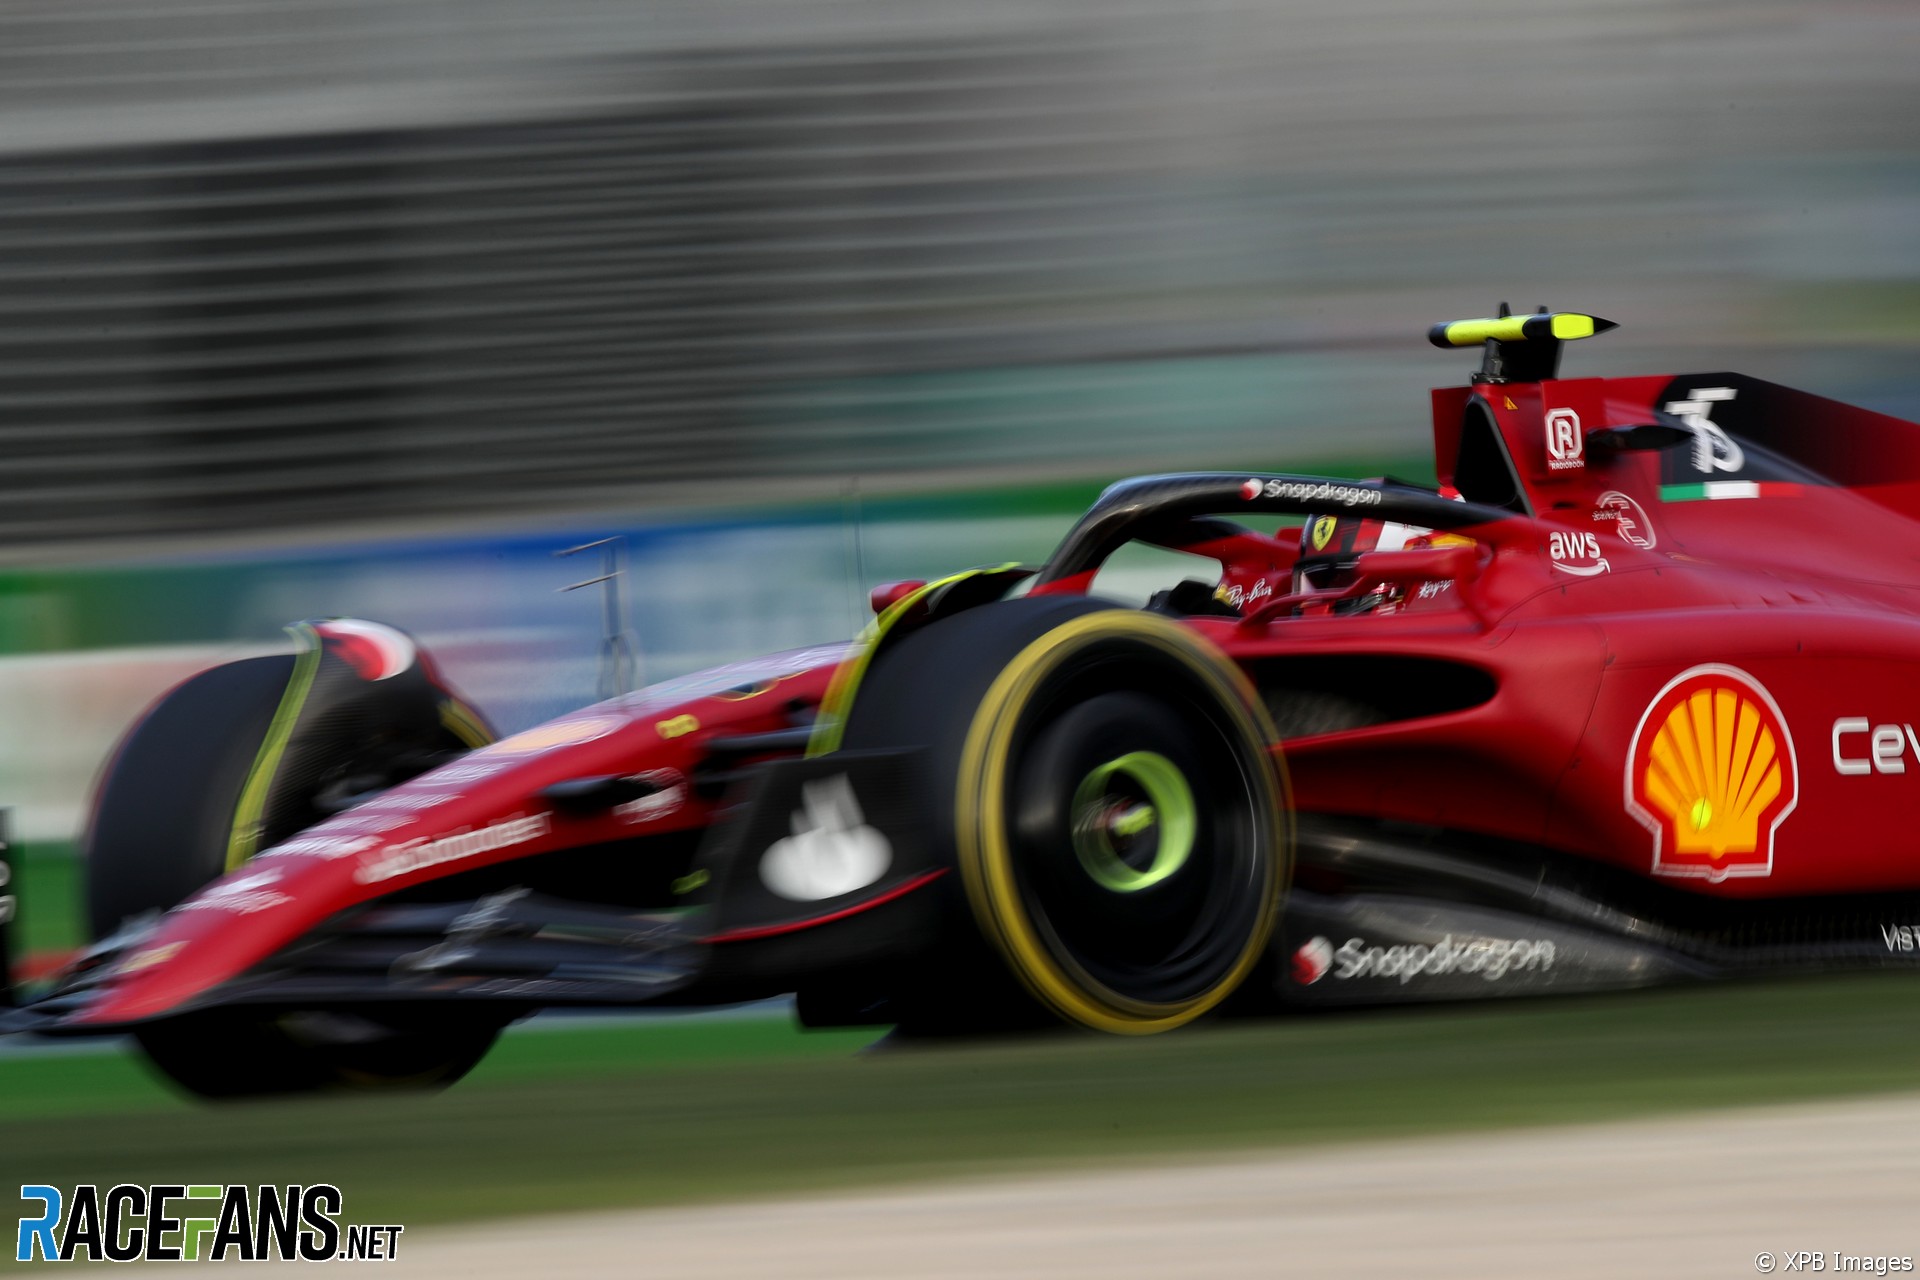 Carlos Sainz Jnr, Ferrari, Albert Park, 2022